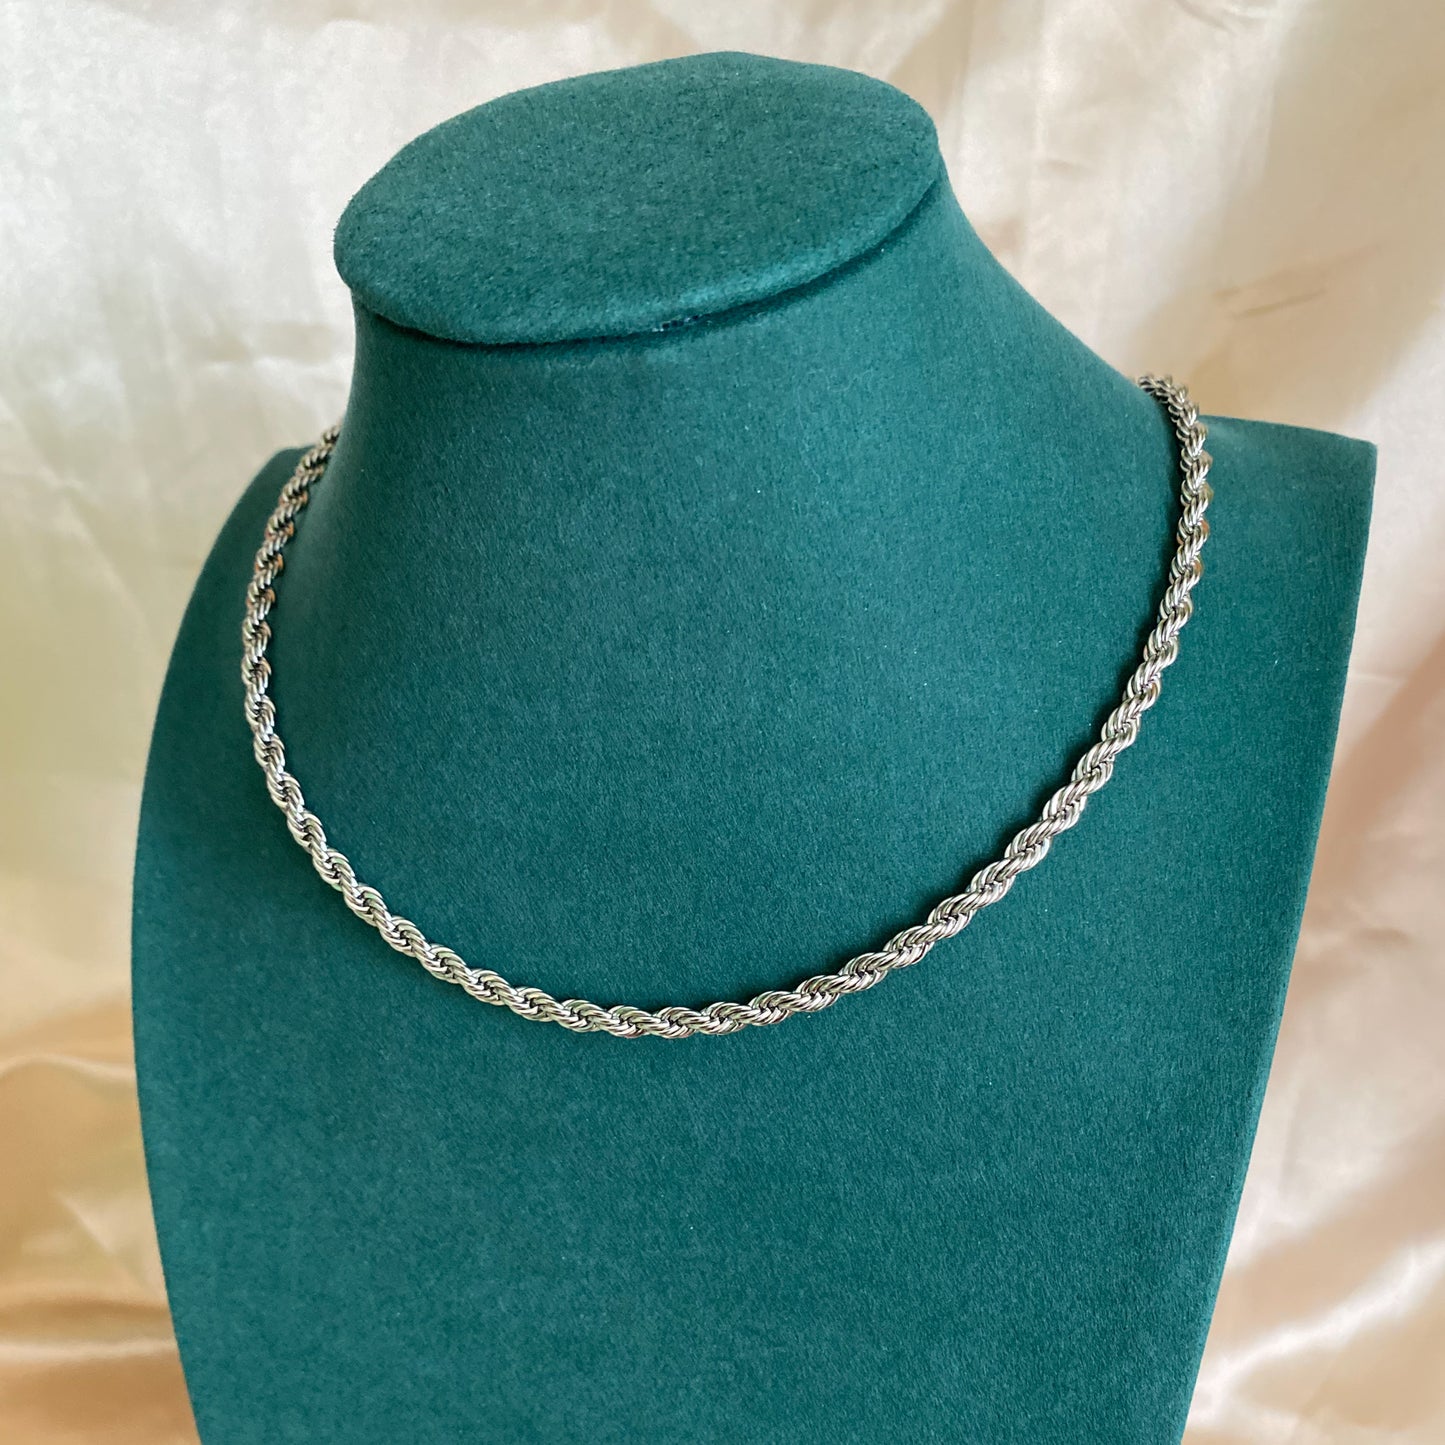 Rosalind necklace